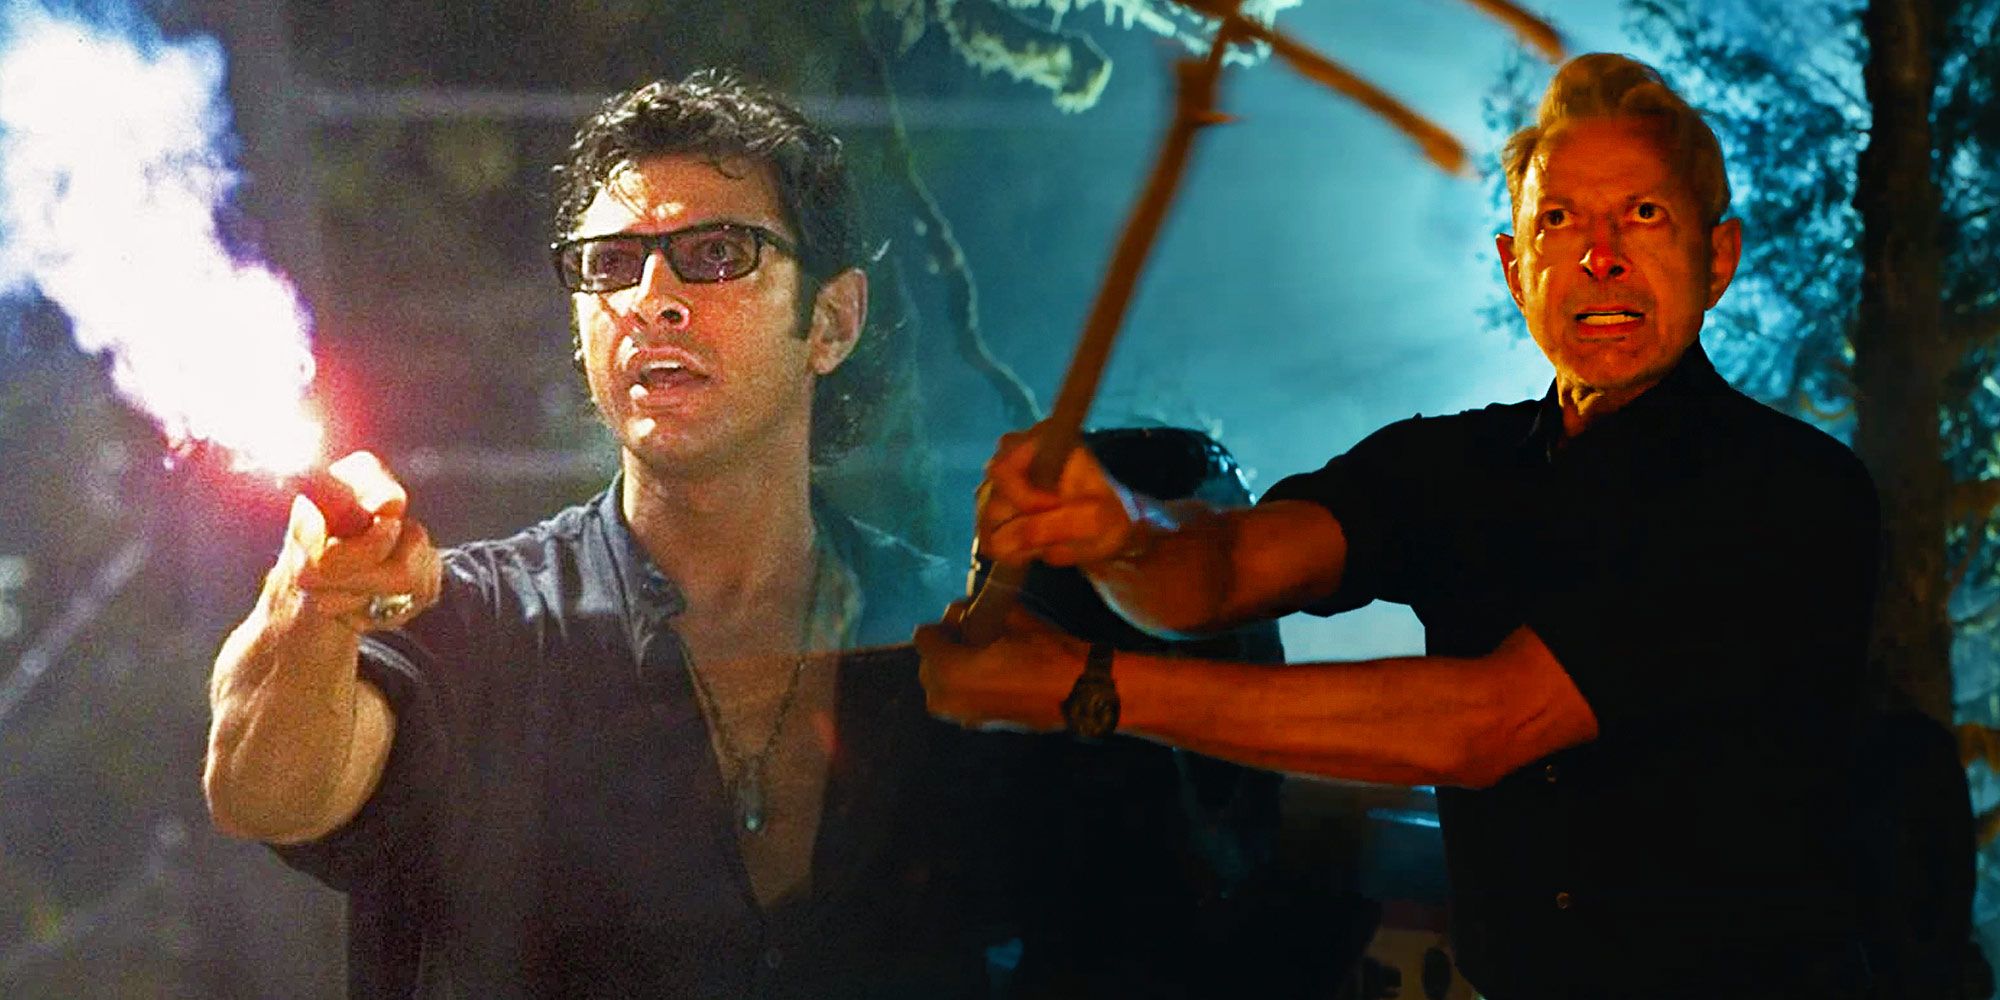 Jeff Goldblum as Ian Malcolm in Jurassic Park and Jurassic World Dominion